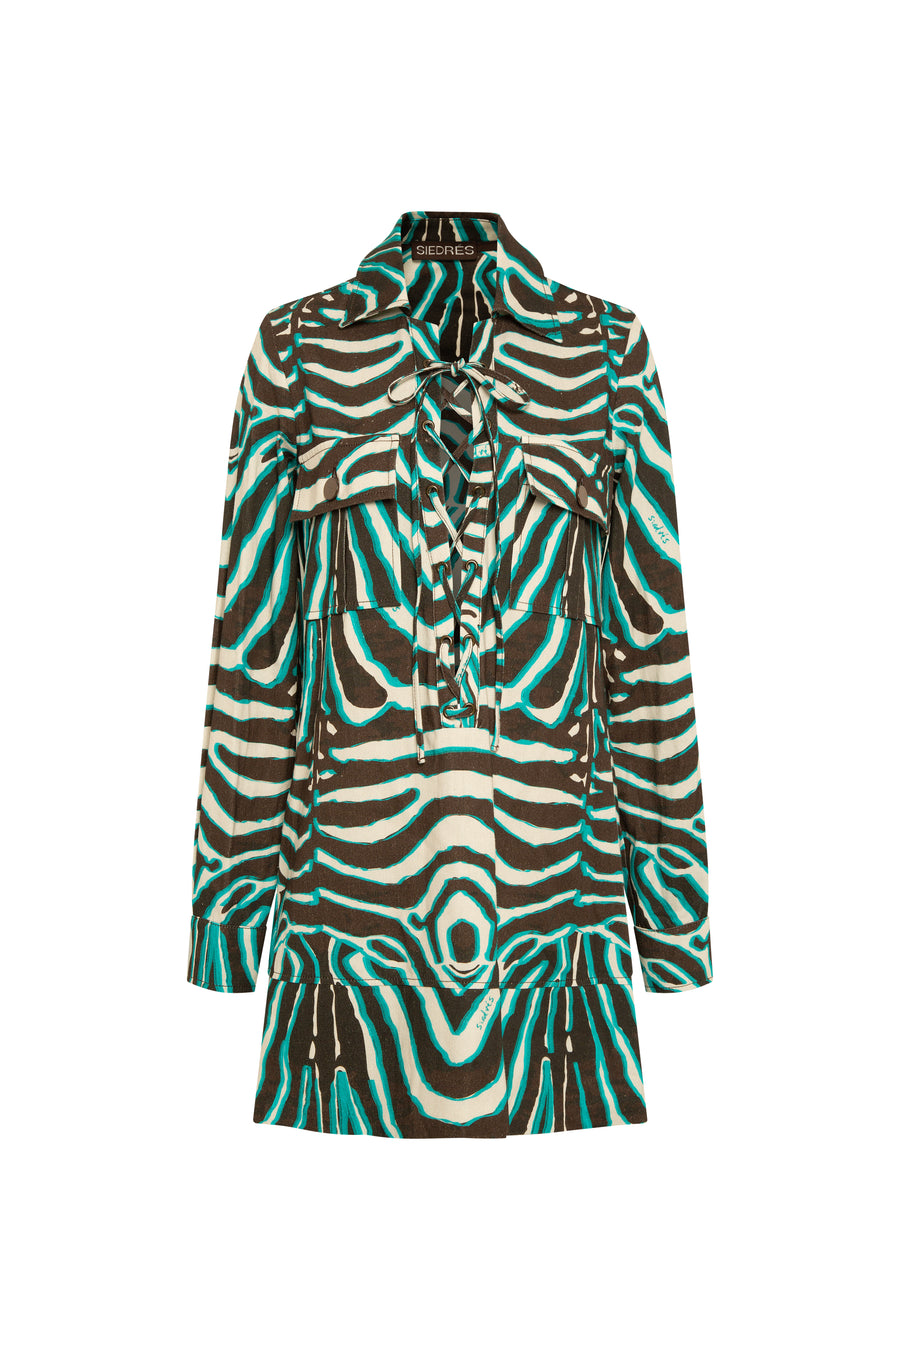 ERICA - Zebra print lace-up overshirt dress